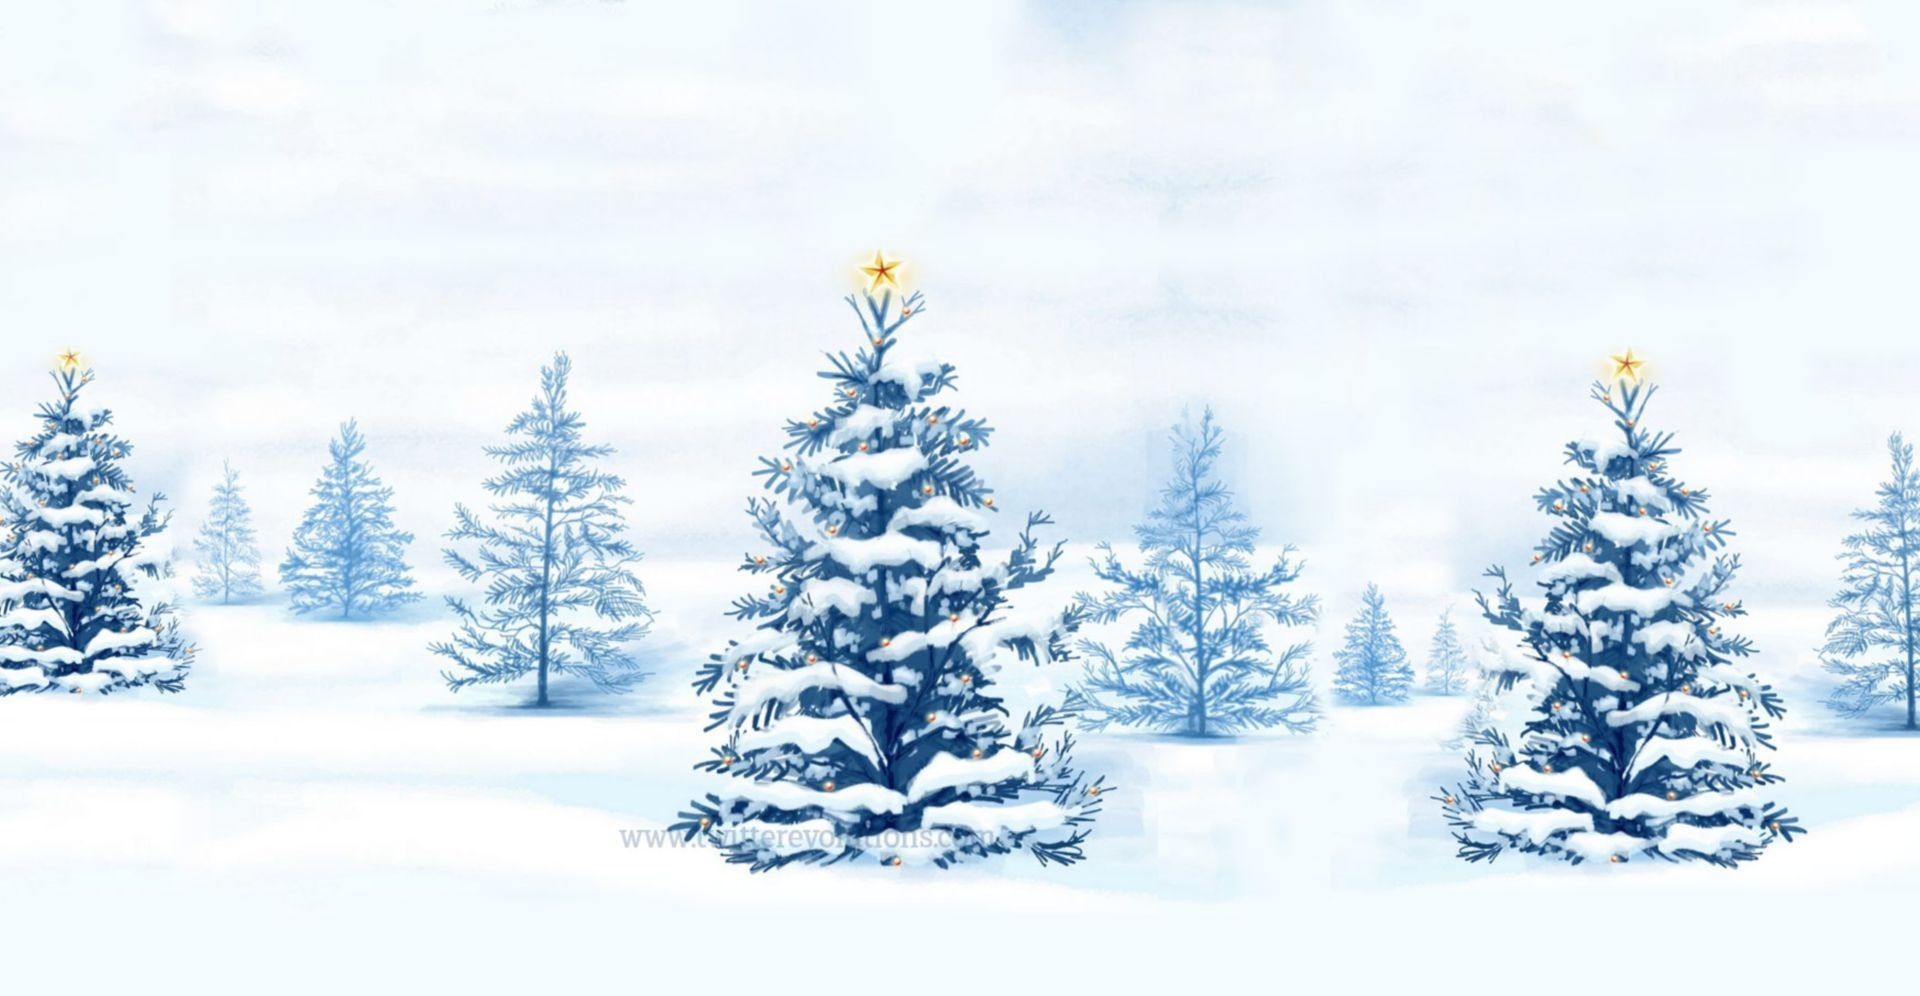 Snowy Winter Christmas Tree Wallpaper: Desktop HD Wallpaper Free Image, Picture, Photo on DailyHDWallpaper.com